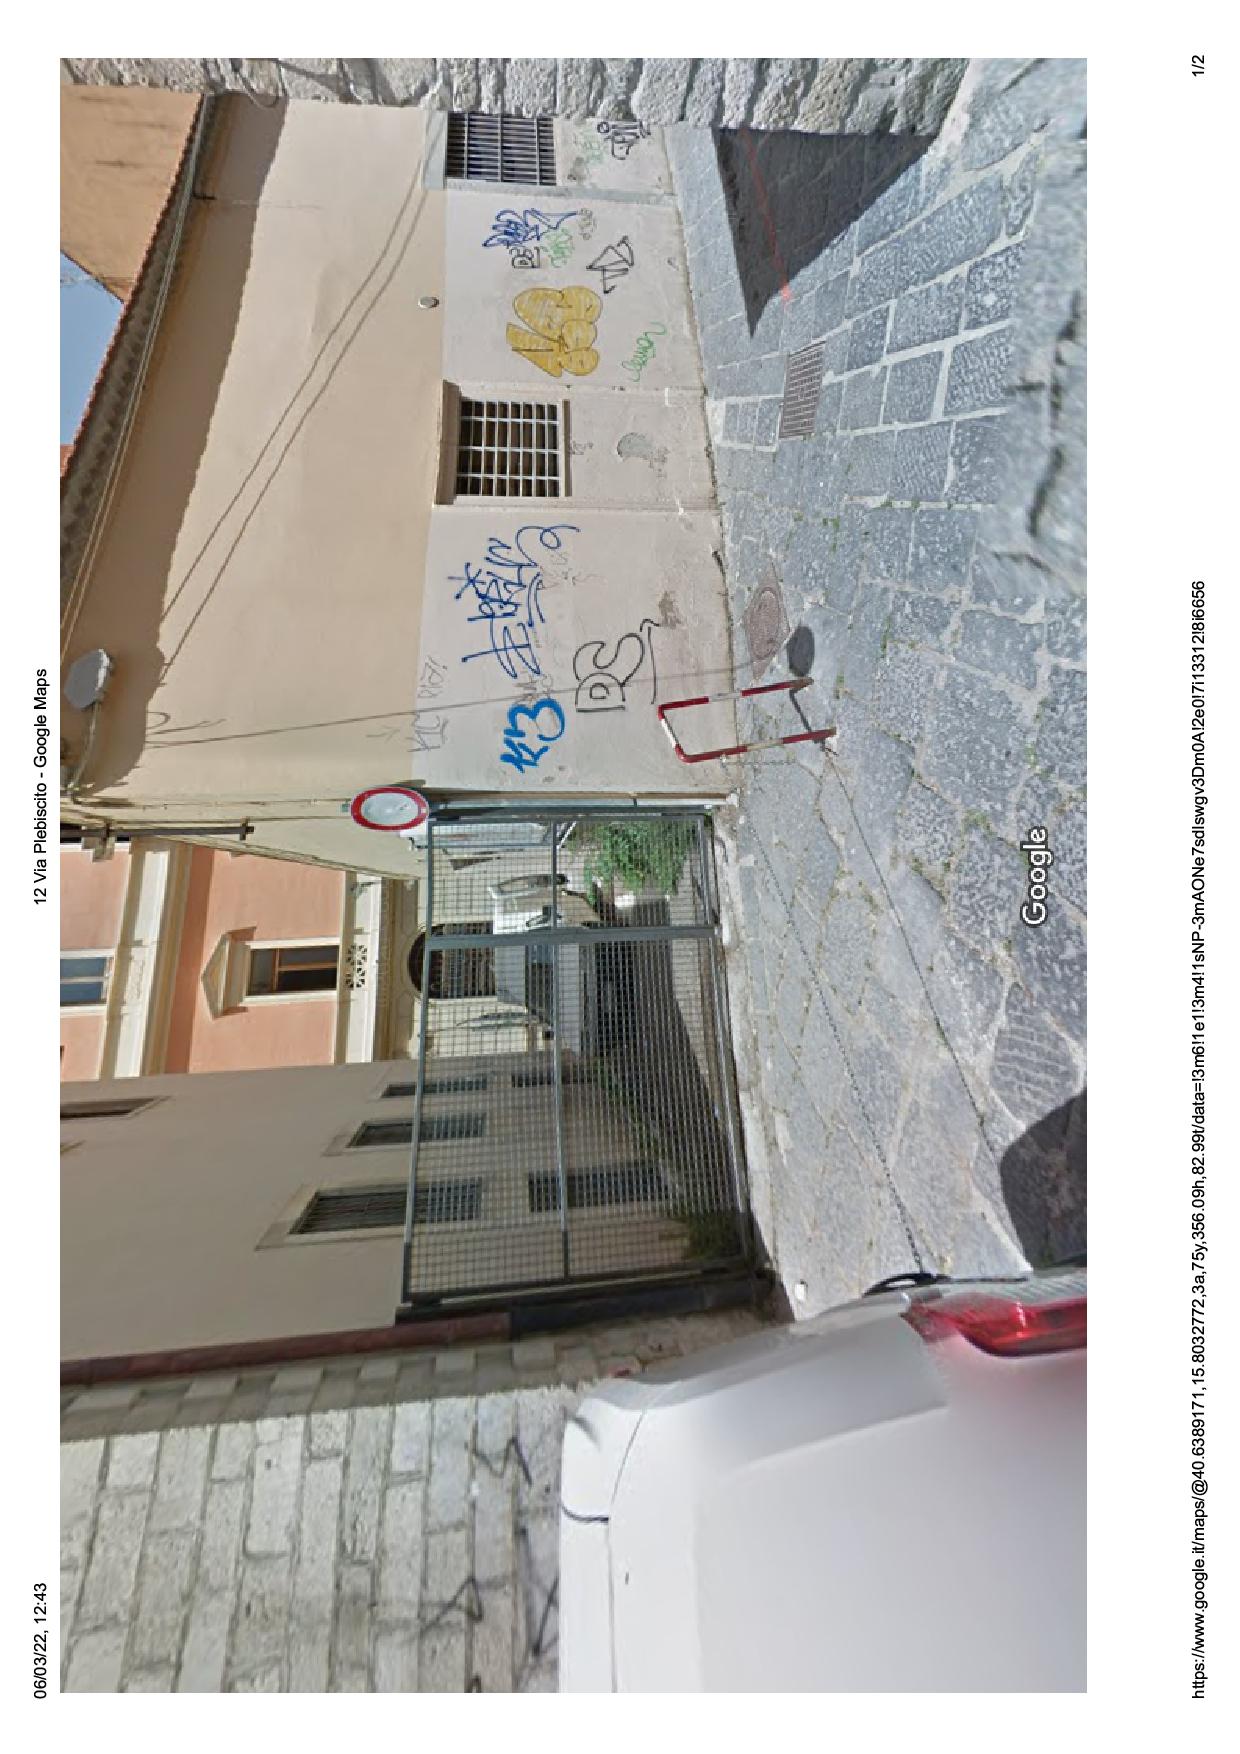 12 Via Plebiscito - Google Maps